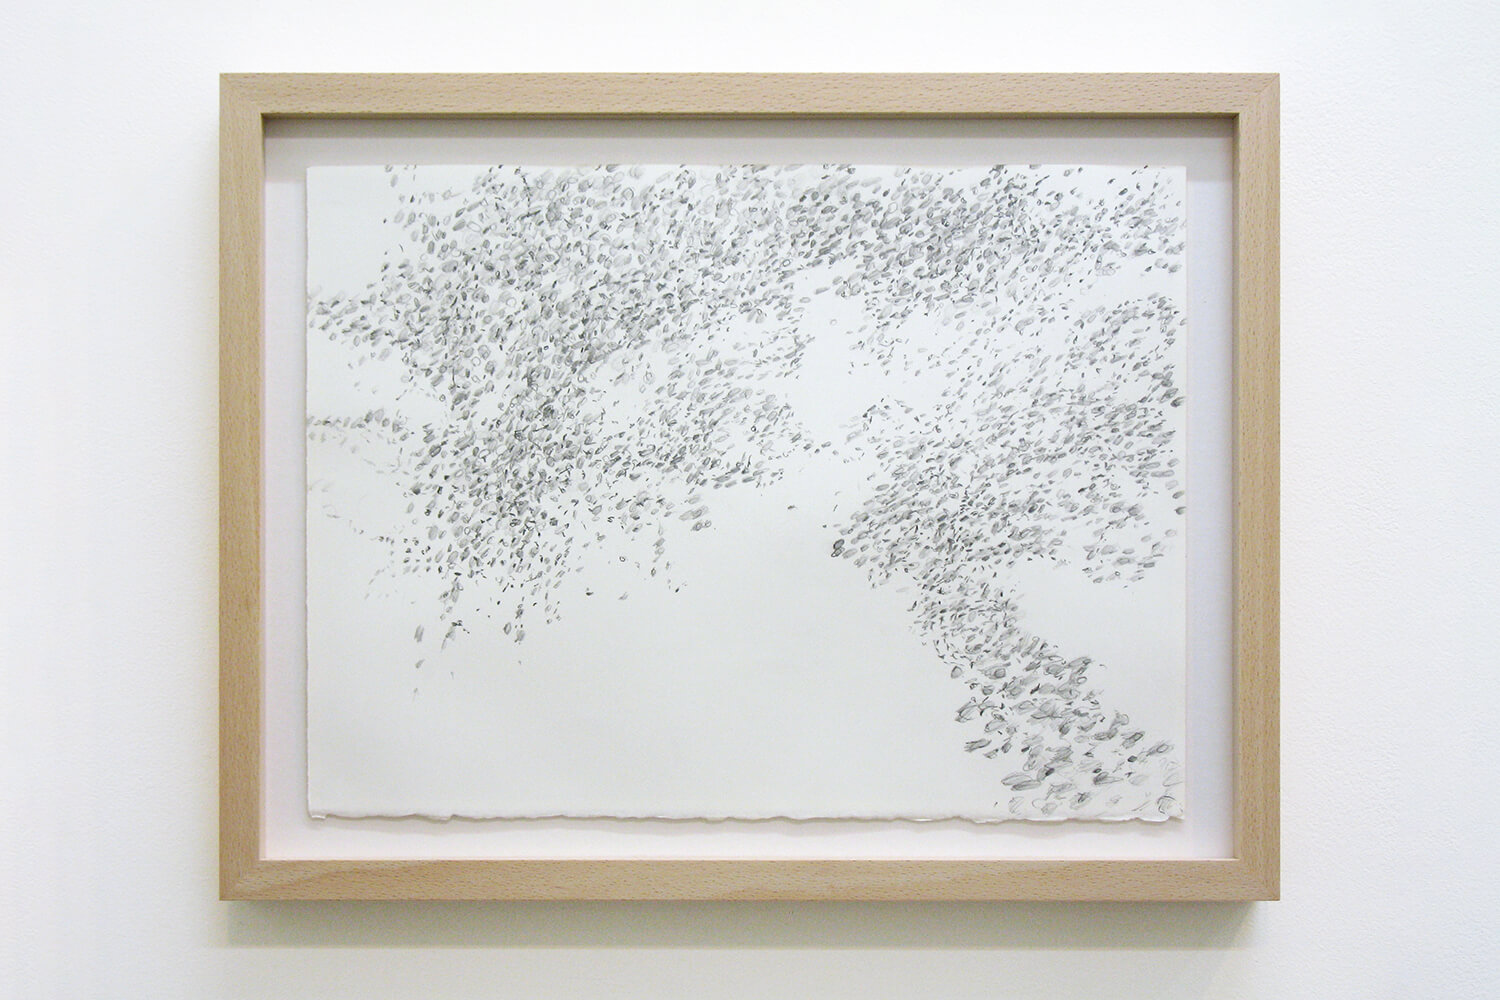 When the Dust Settles (d14)<br>Pencil on paper, 28.5 x 38 cm, 2011